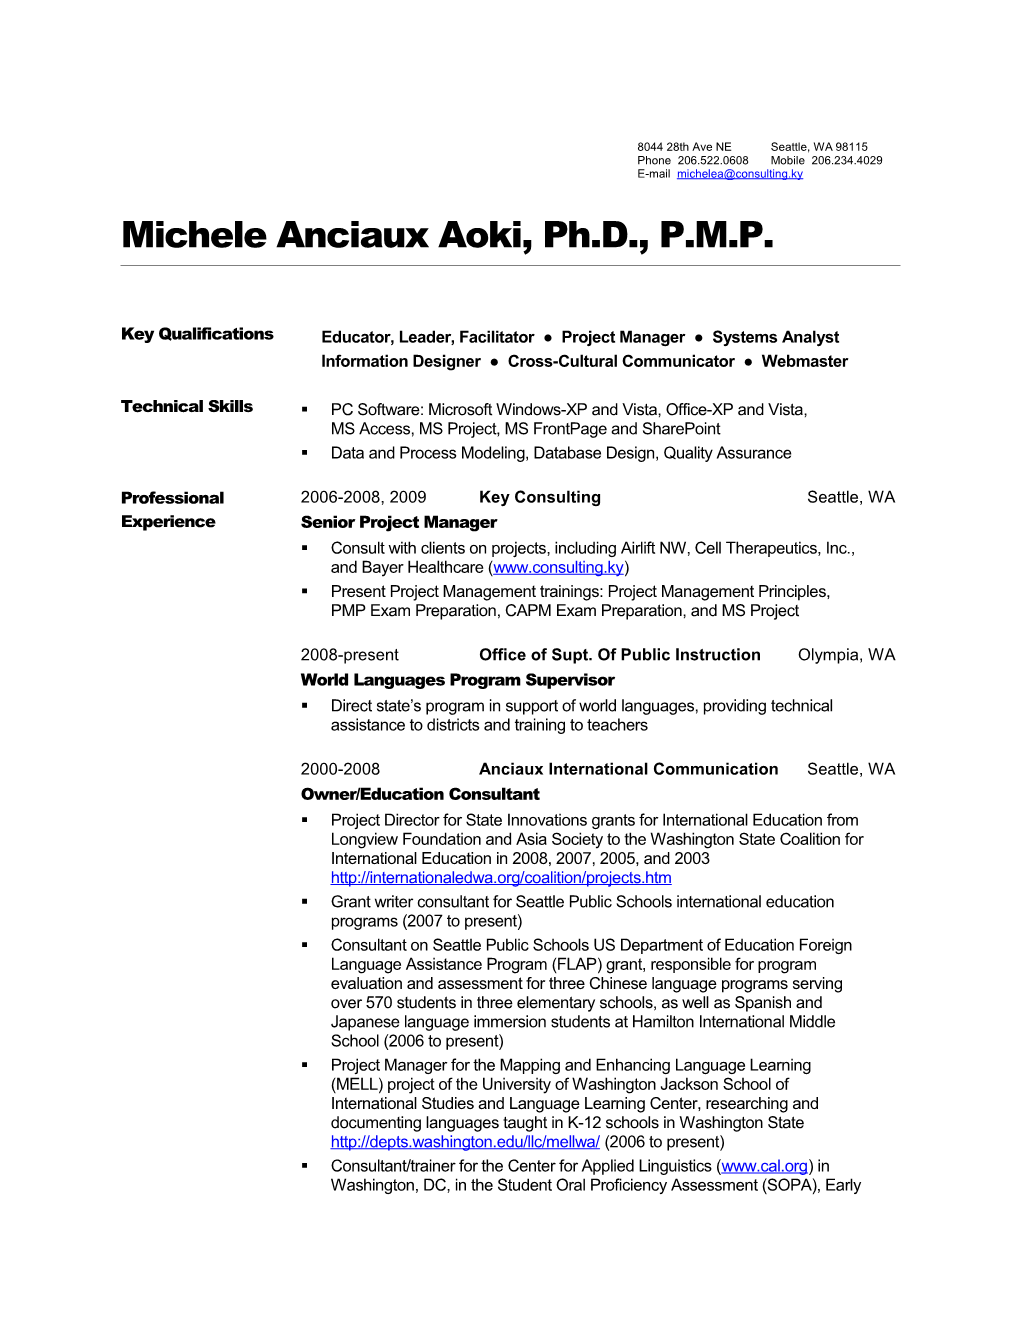 Resume for Michele Anciaux Aoki